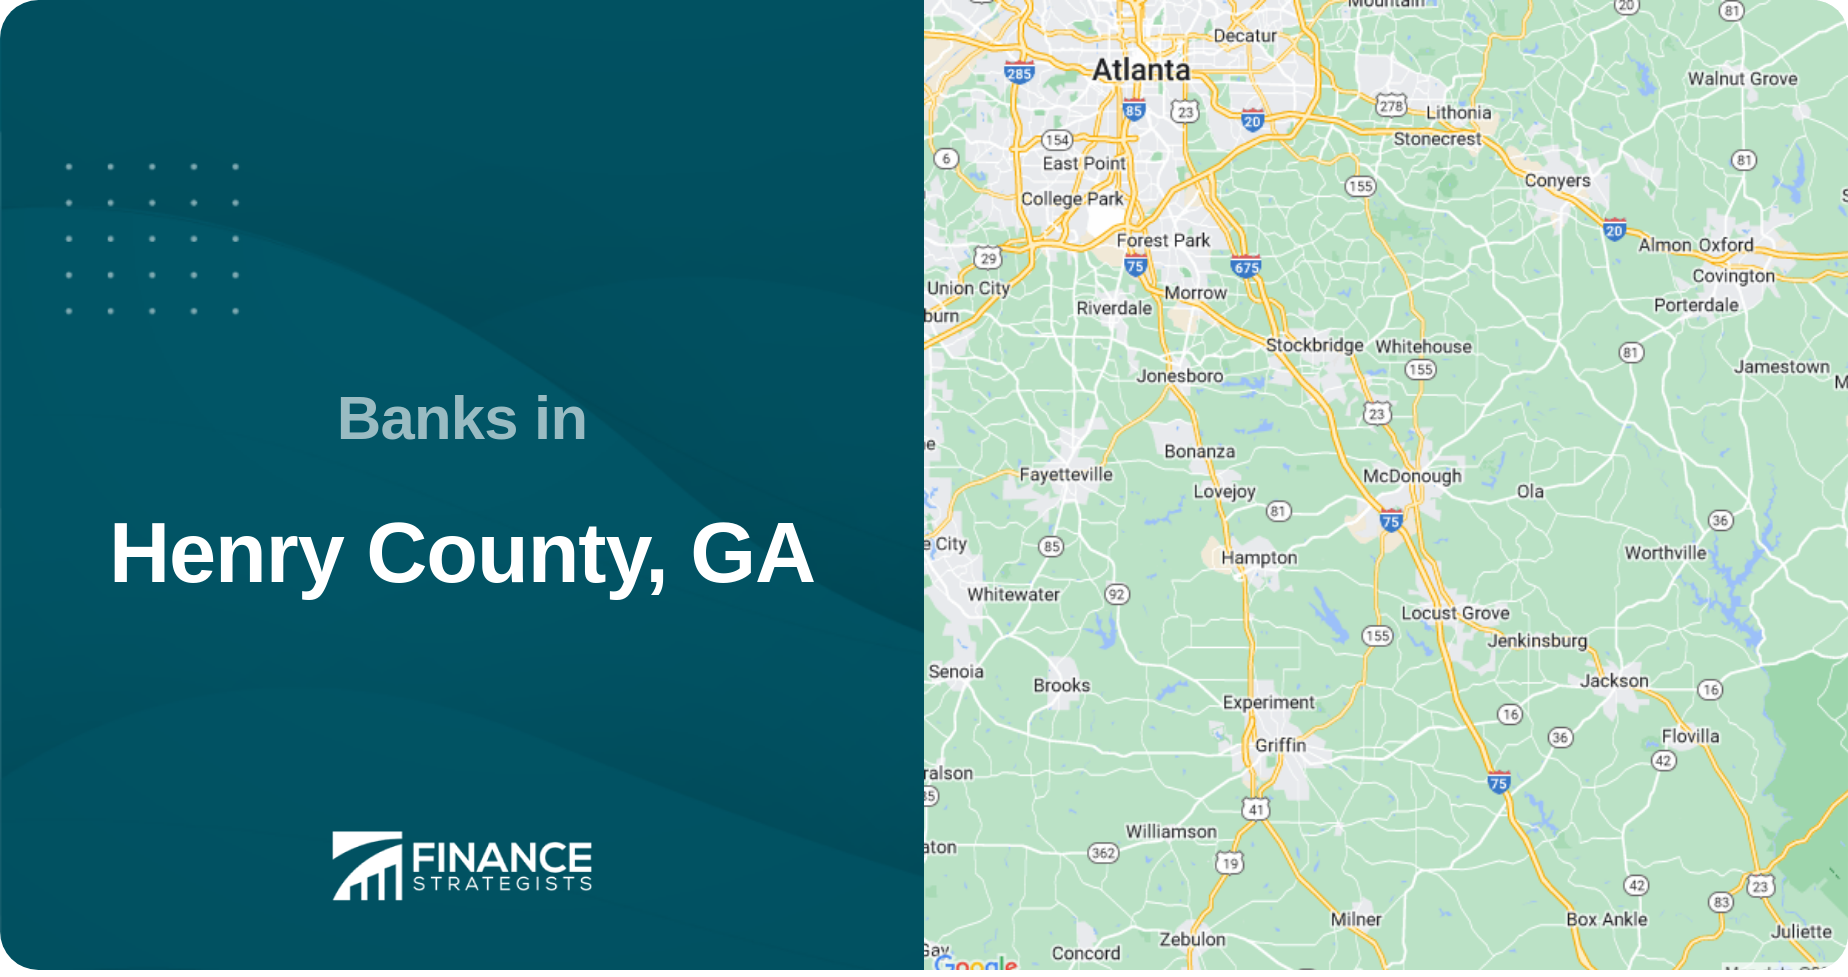 Banks in Henry County, GA